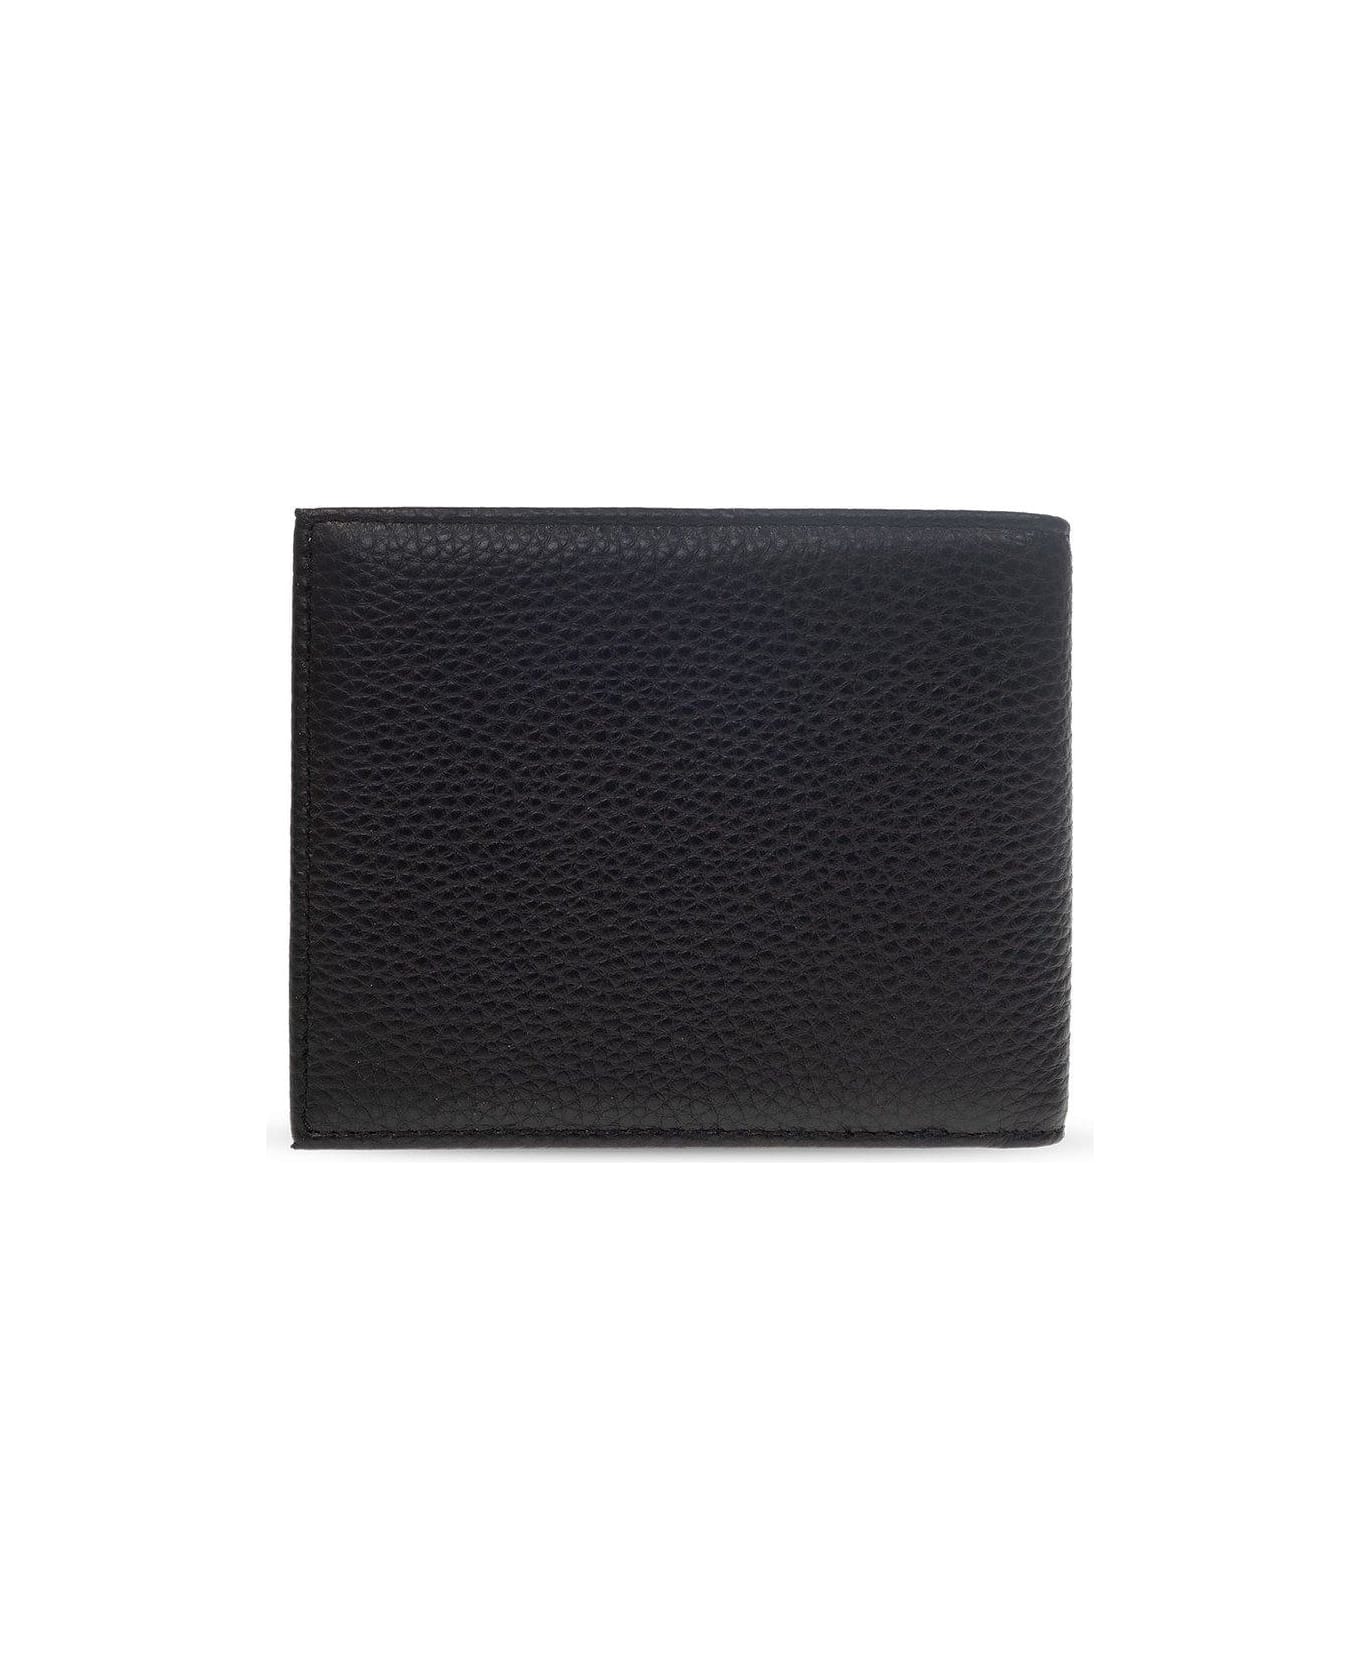 Versace Jeans Couture Wallet - BLACK/GOLD 財布